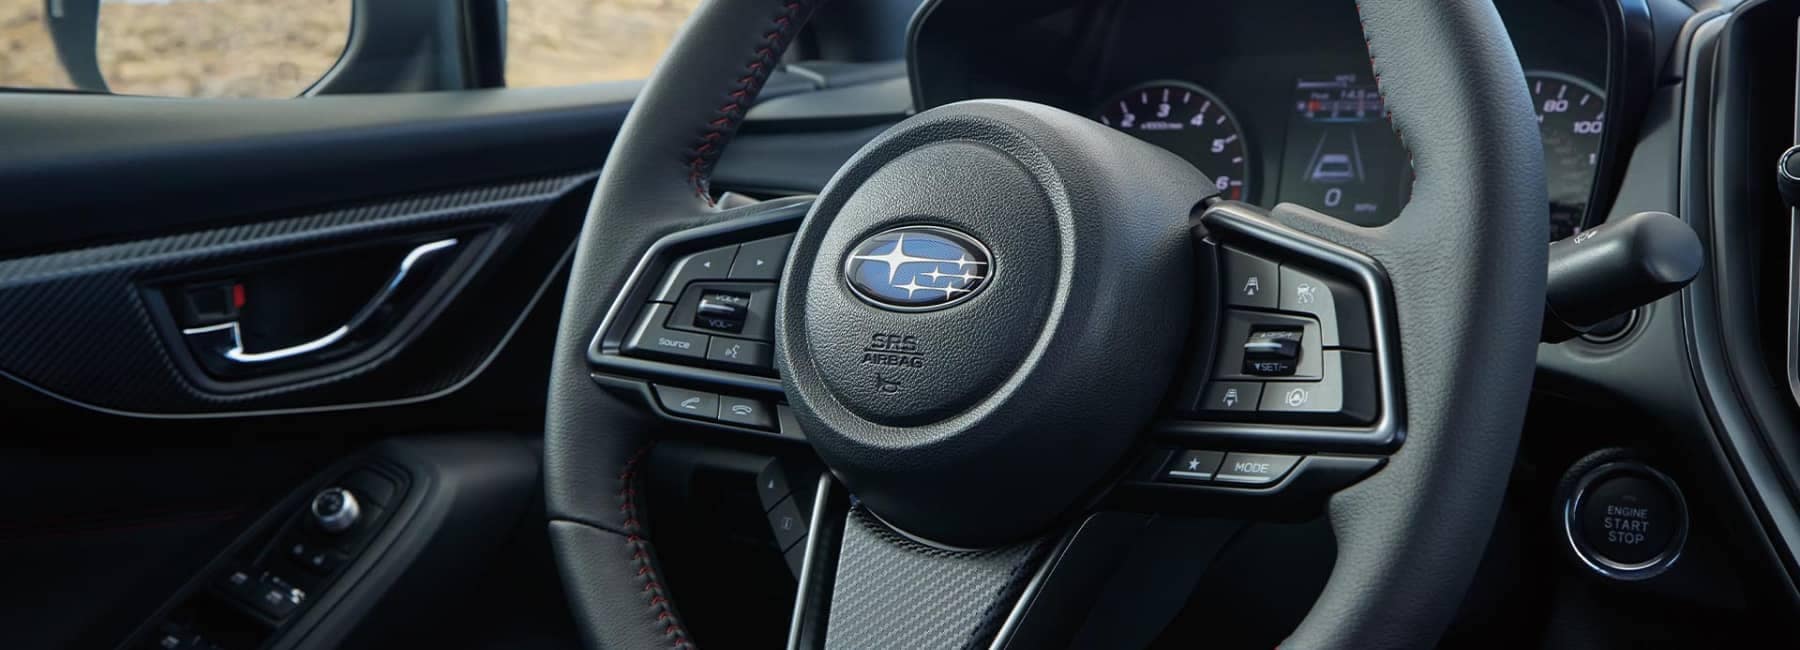 WRX-interior-closeup on steering wheel